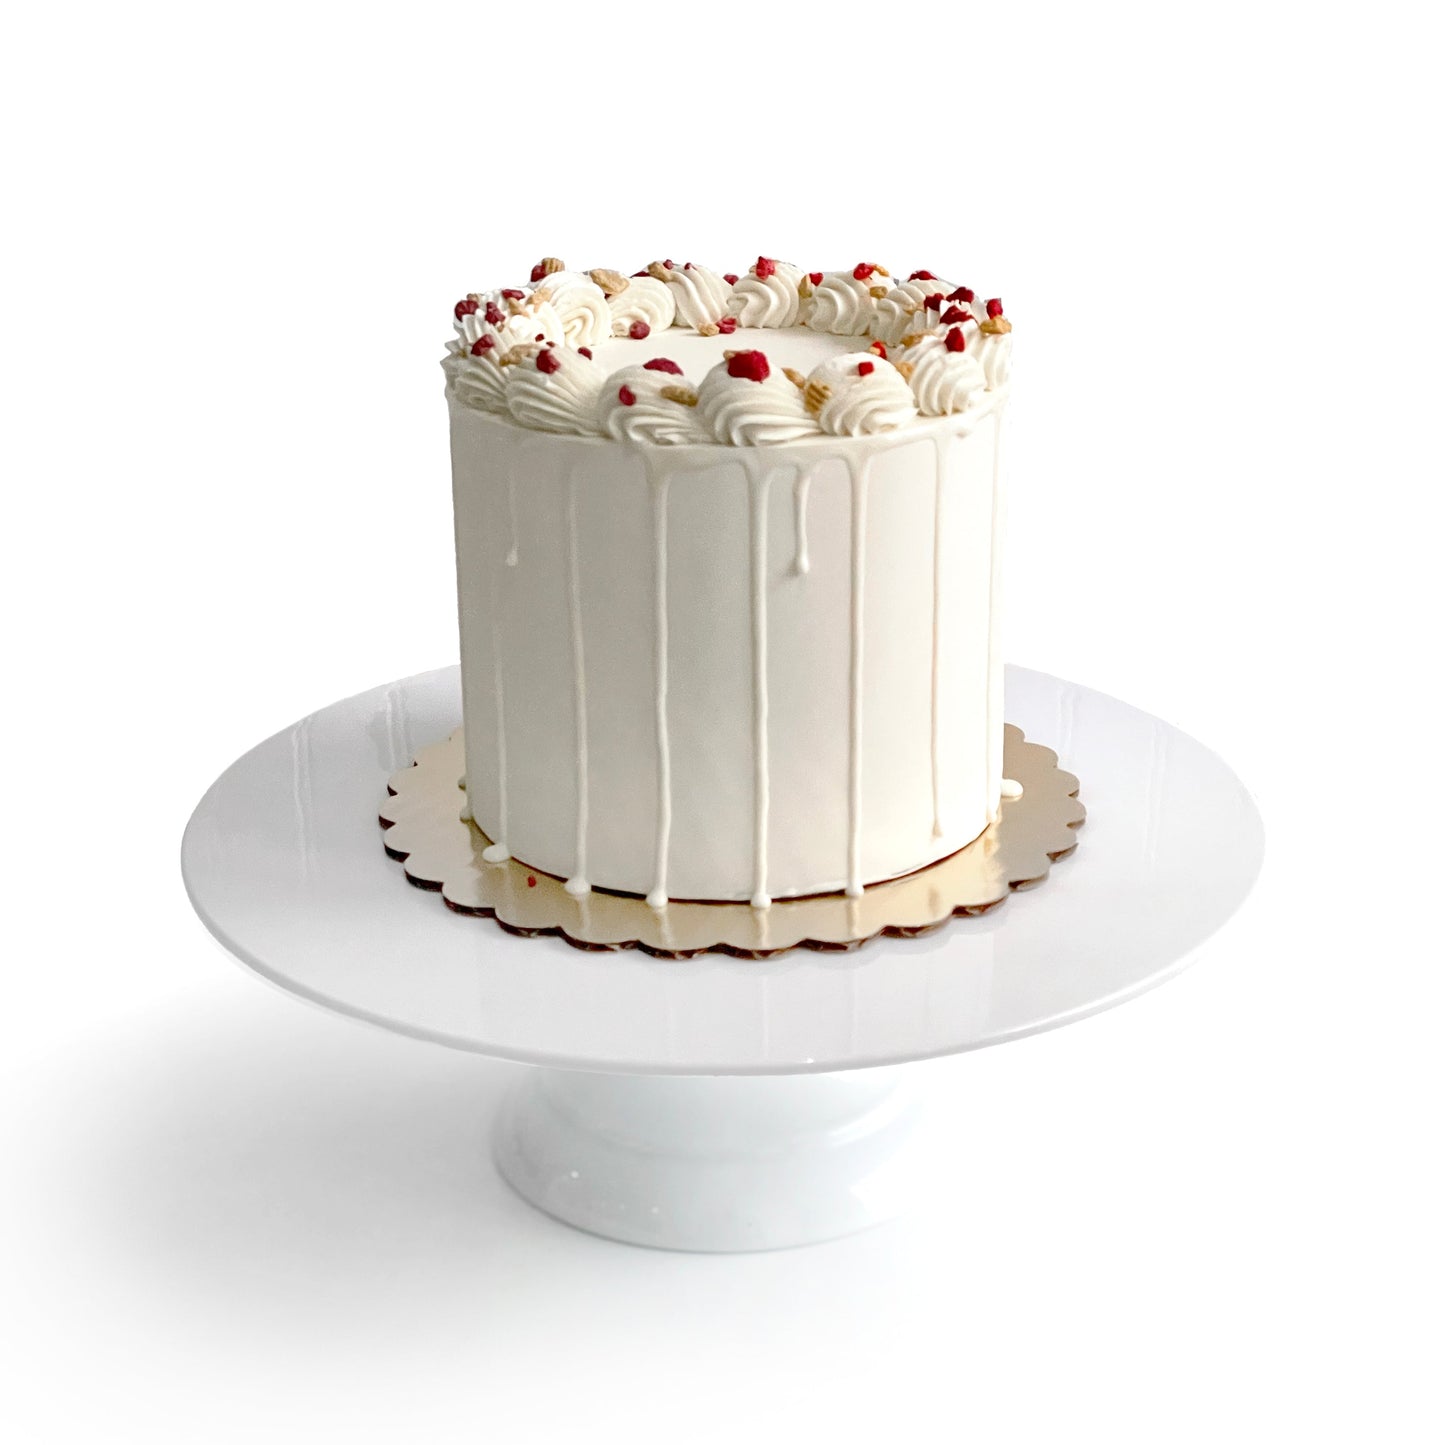 Double Vanilla Cake filled w/ Strawberry Preserves